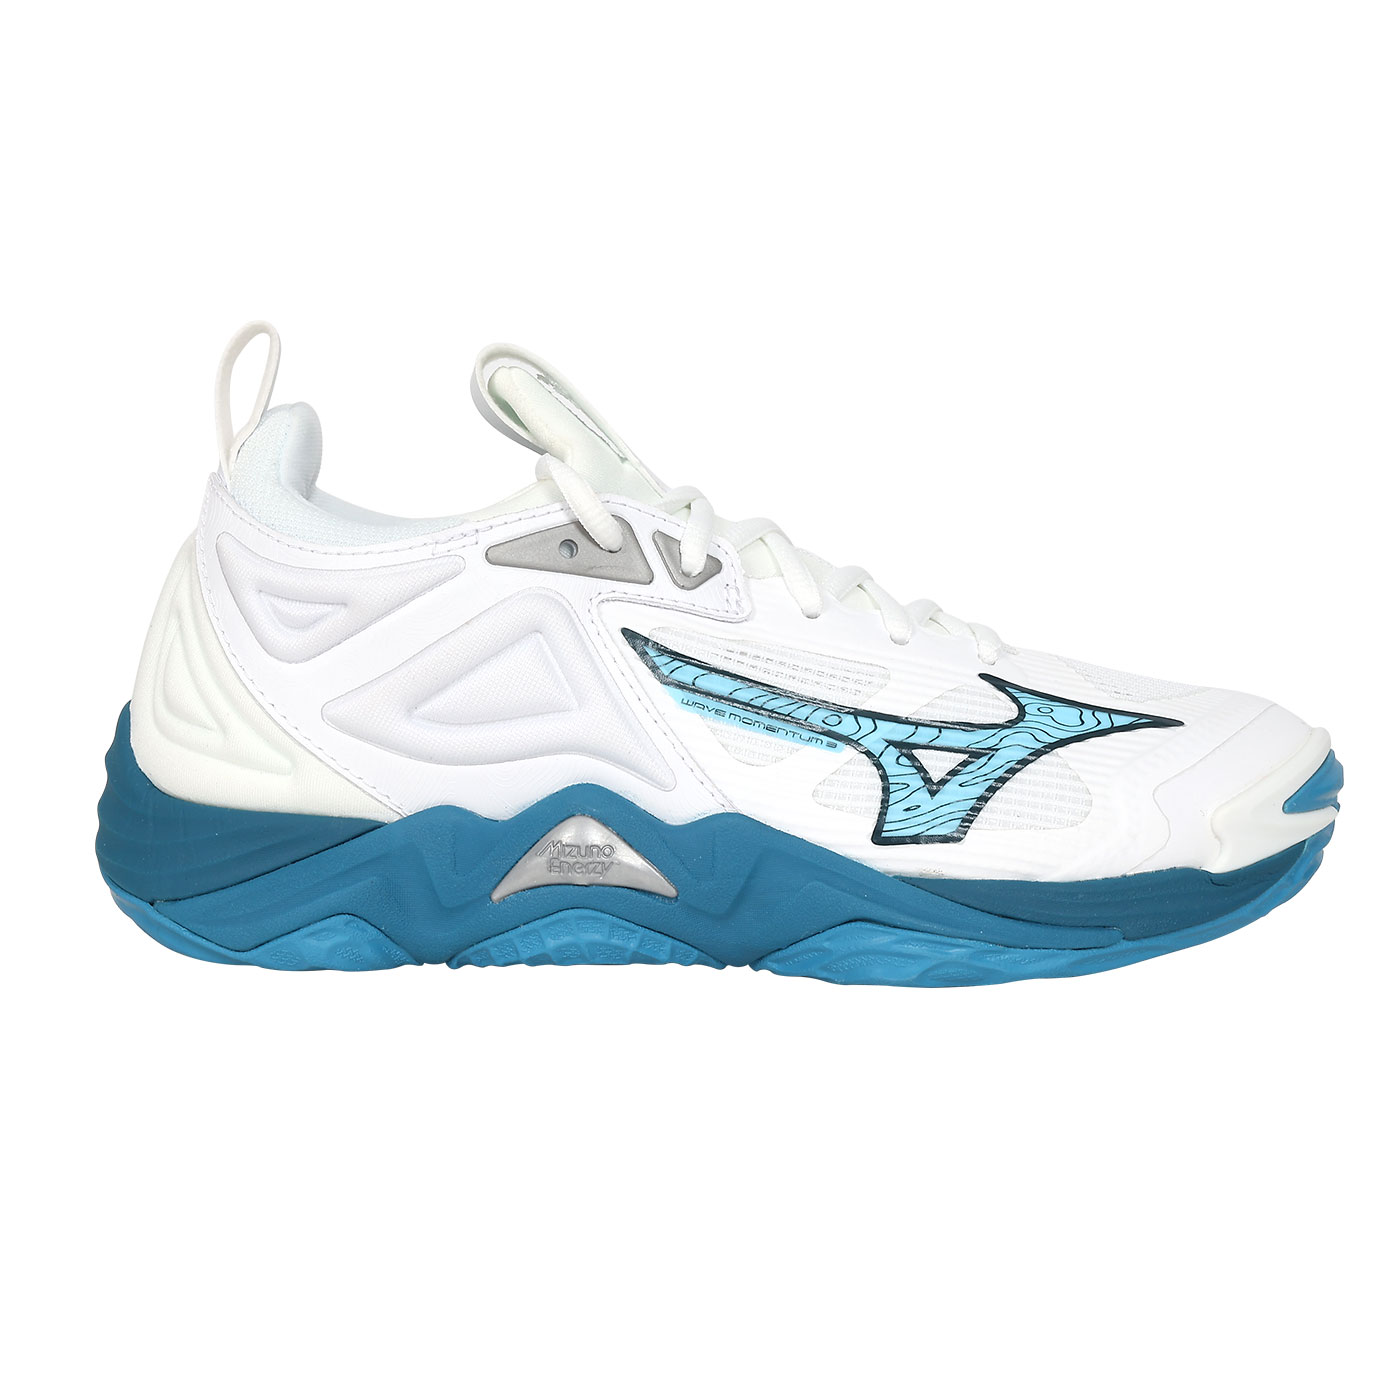 MIZUNO 女款排球鞋  @WAVE MOMENTUM 3@ V1GA231221 - 白水藍湖藍